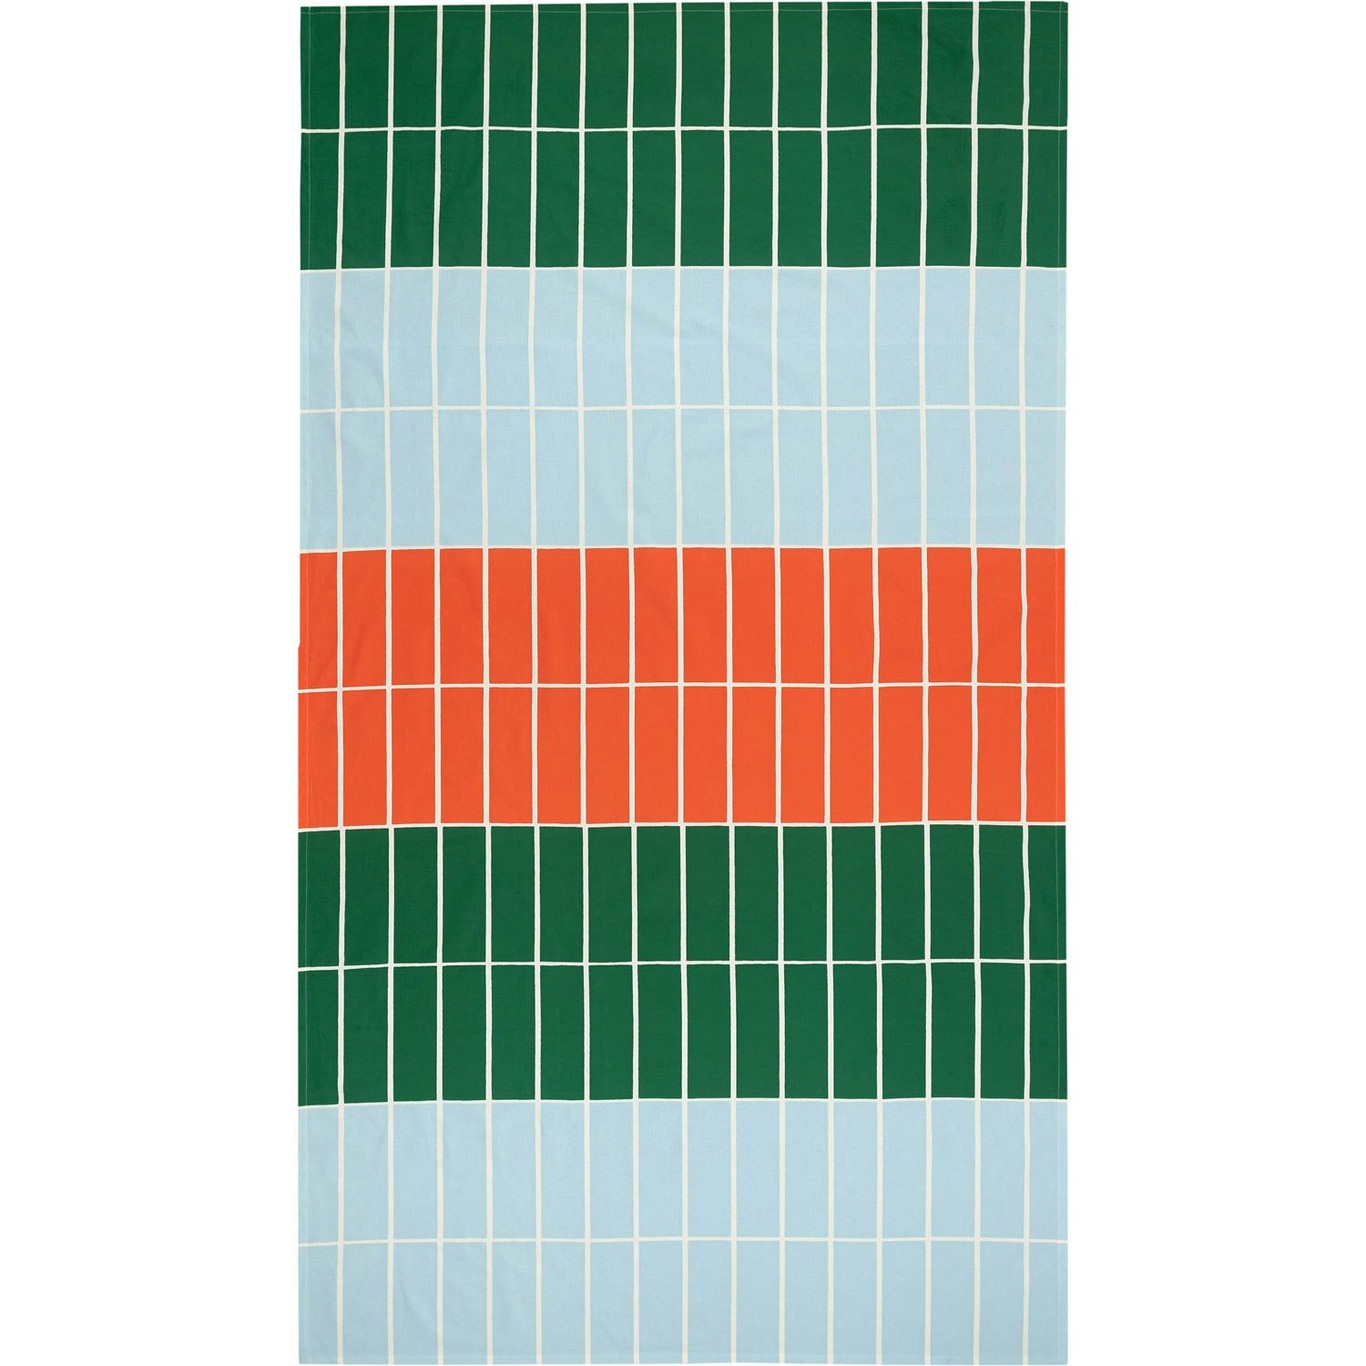 Tiiliskivi Table Cloth 135x245 cm, Orange / Light Blue / Green